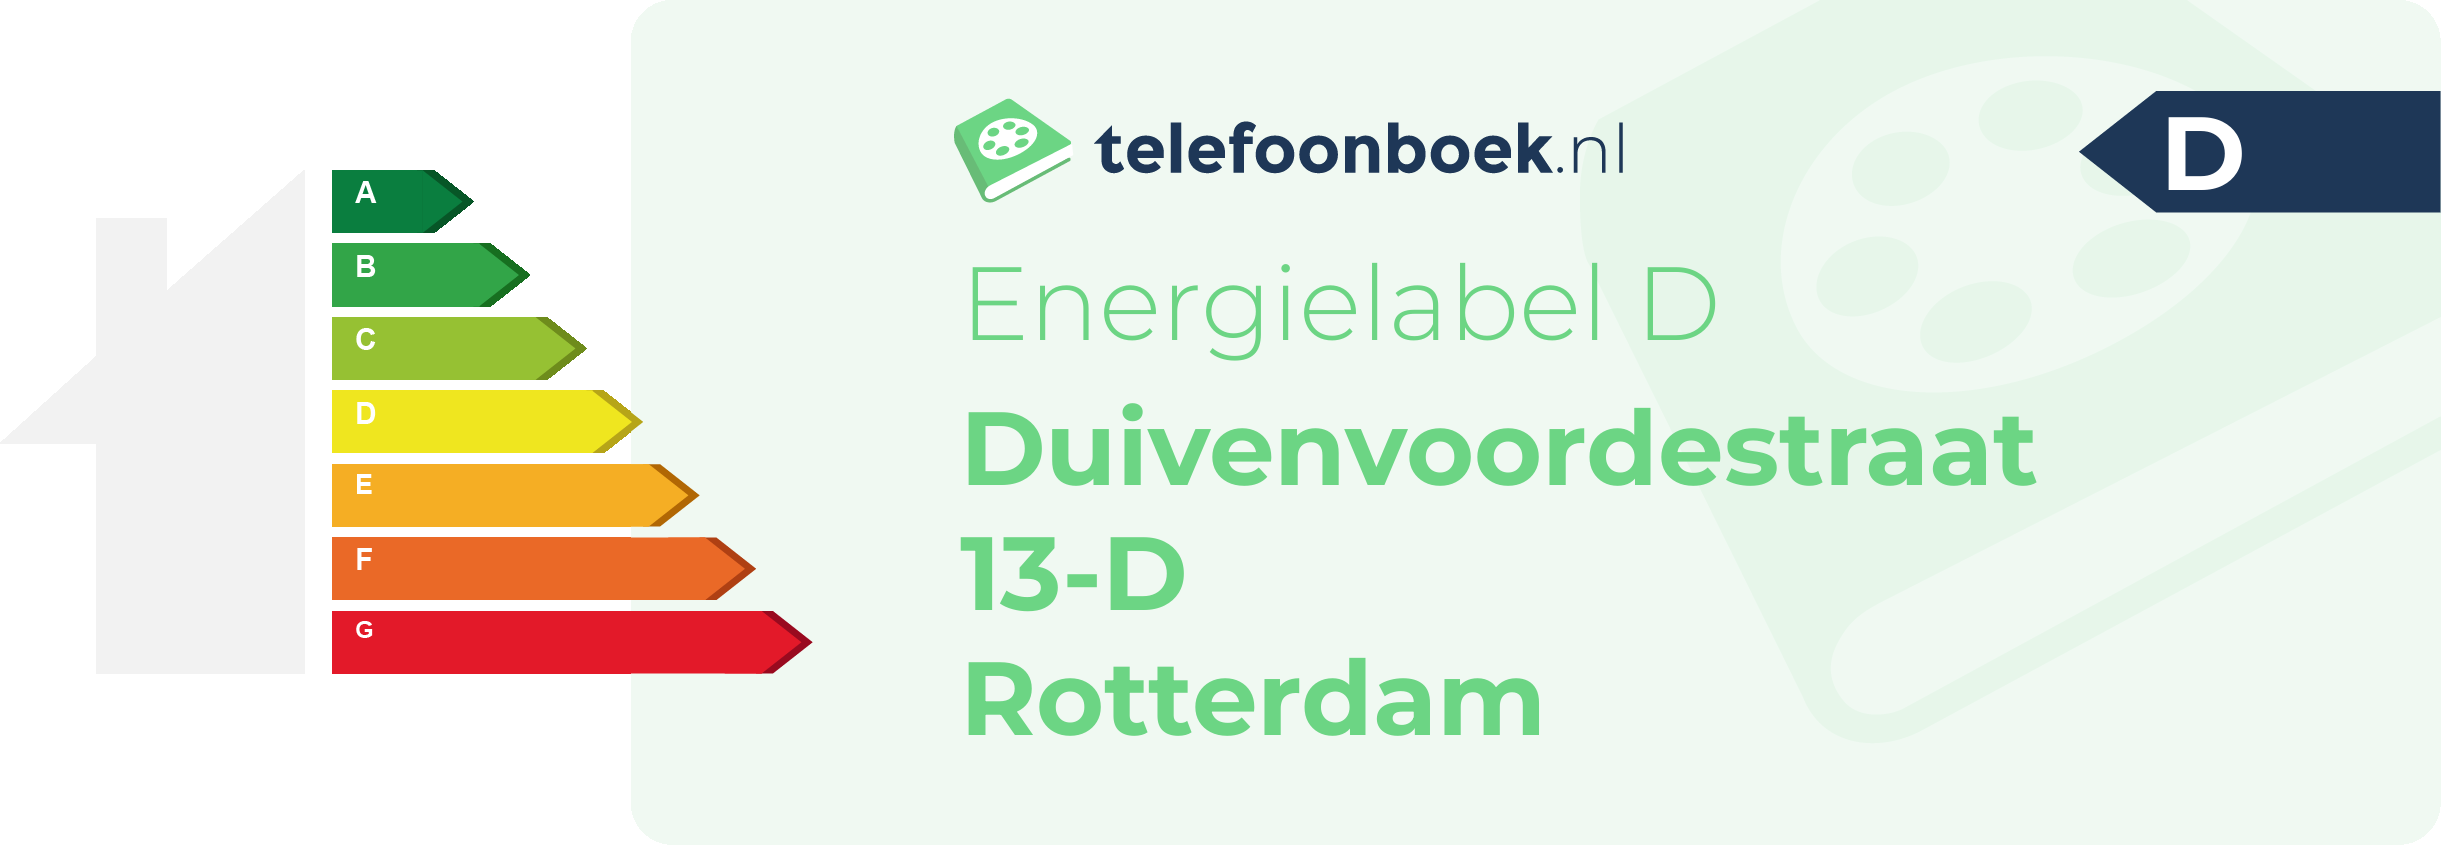 Energielabel Duivenvoordestraat 13-D Rotterdam